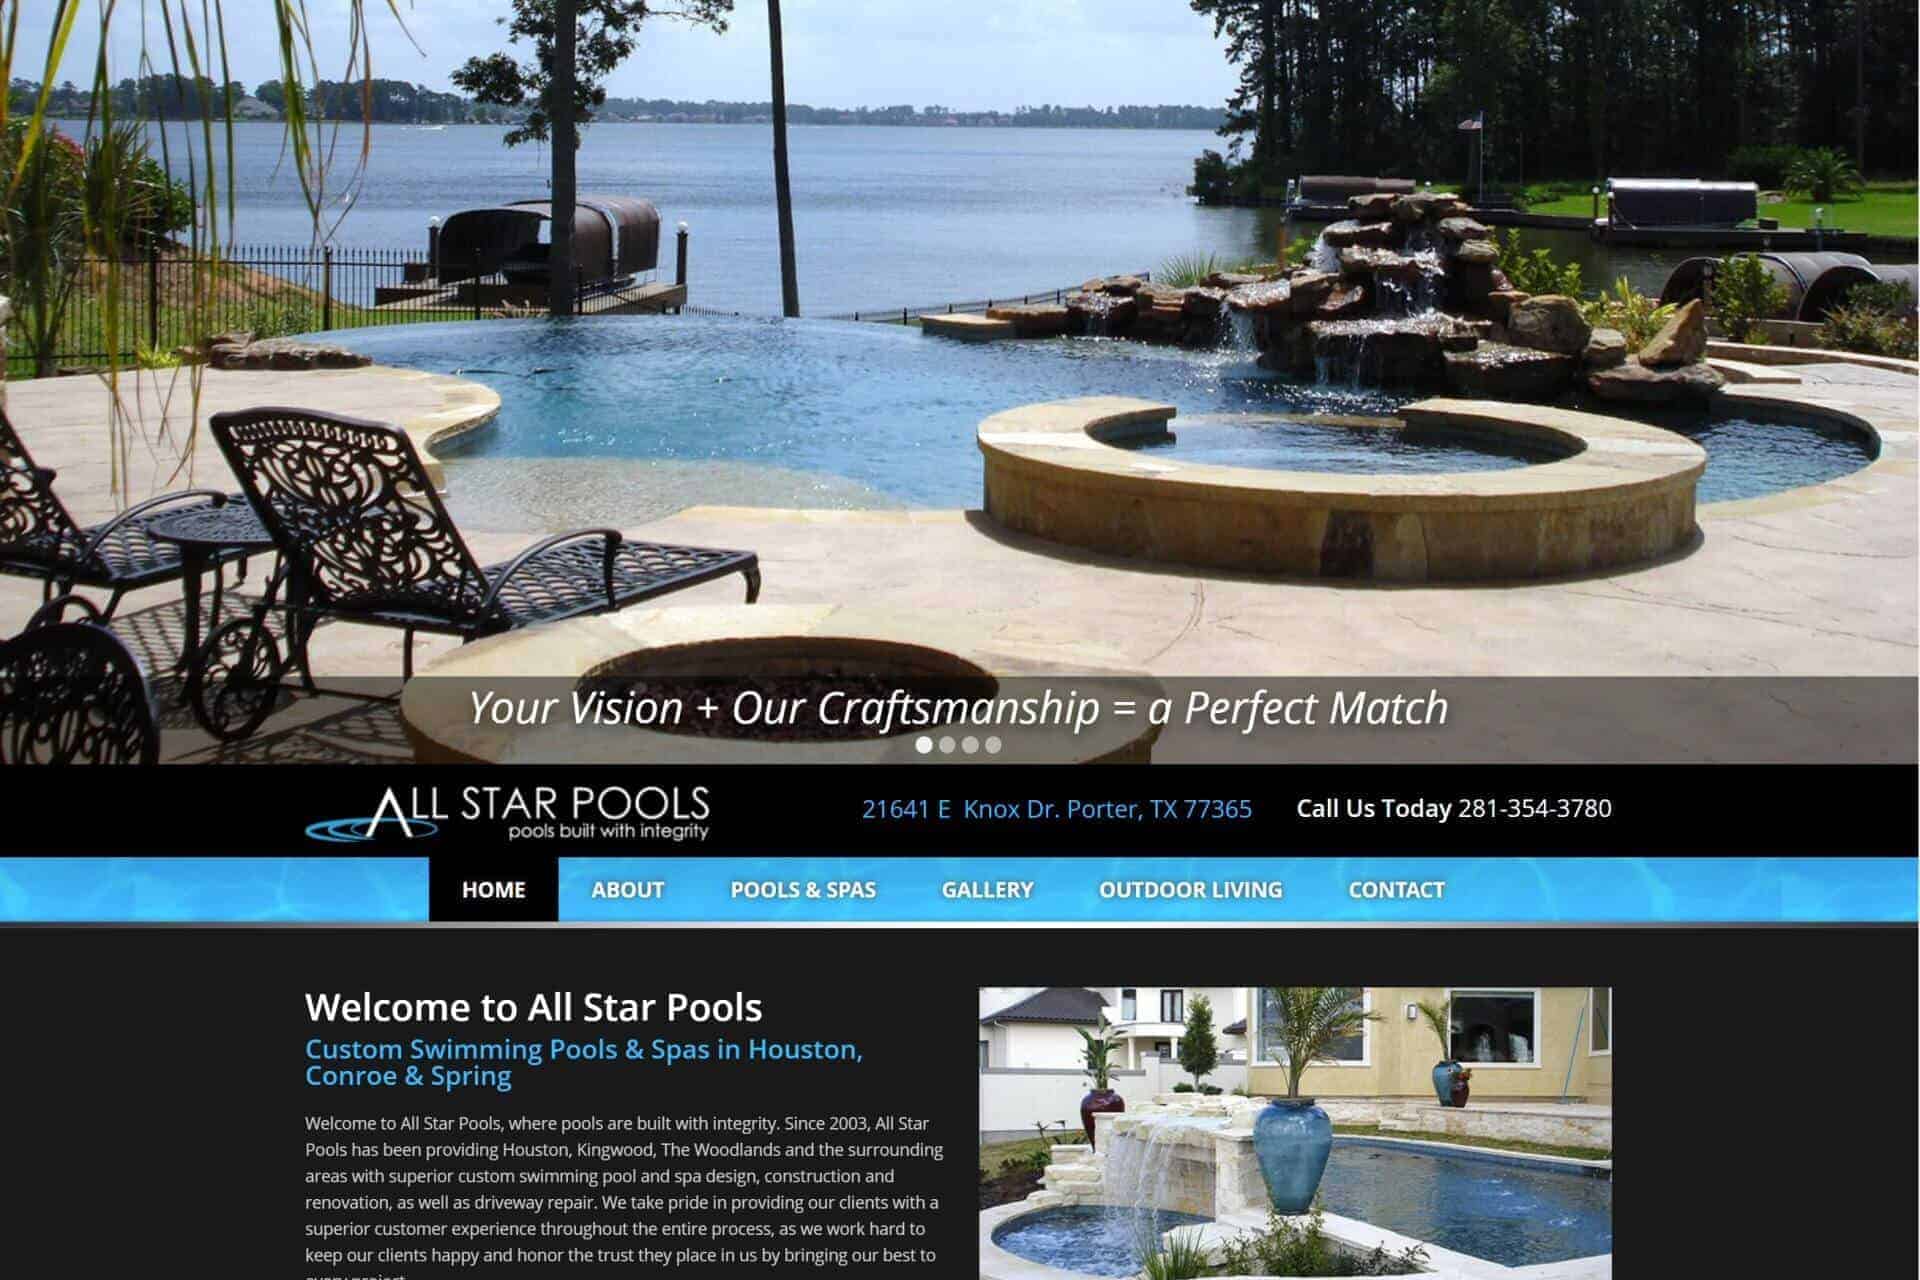 Website Links - All Star Pools